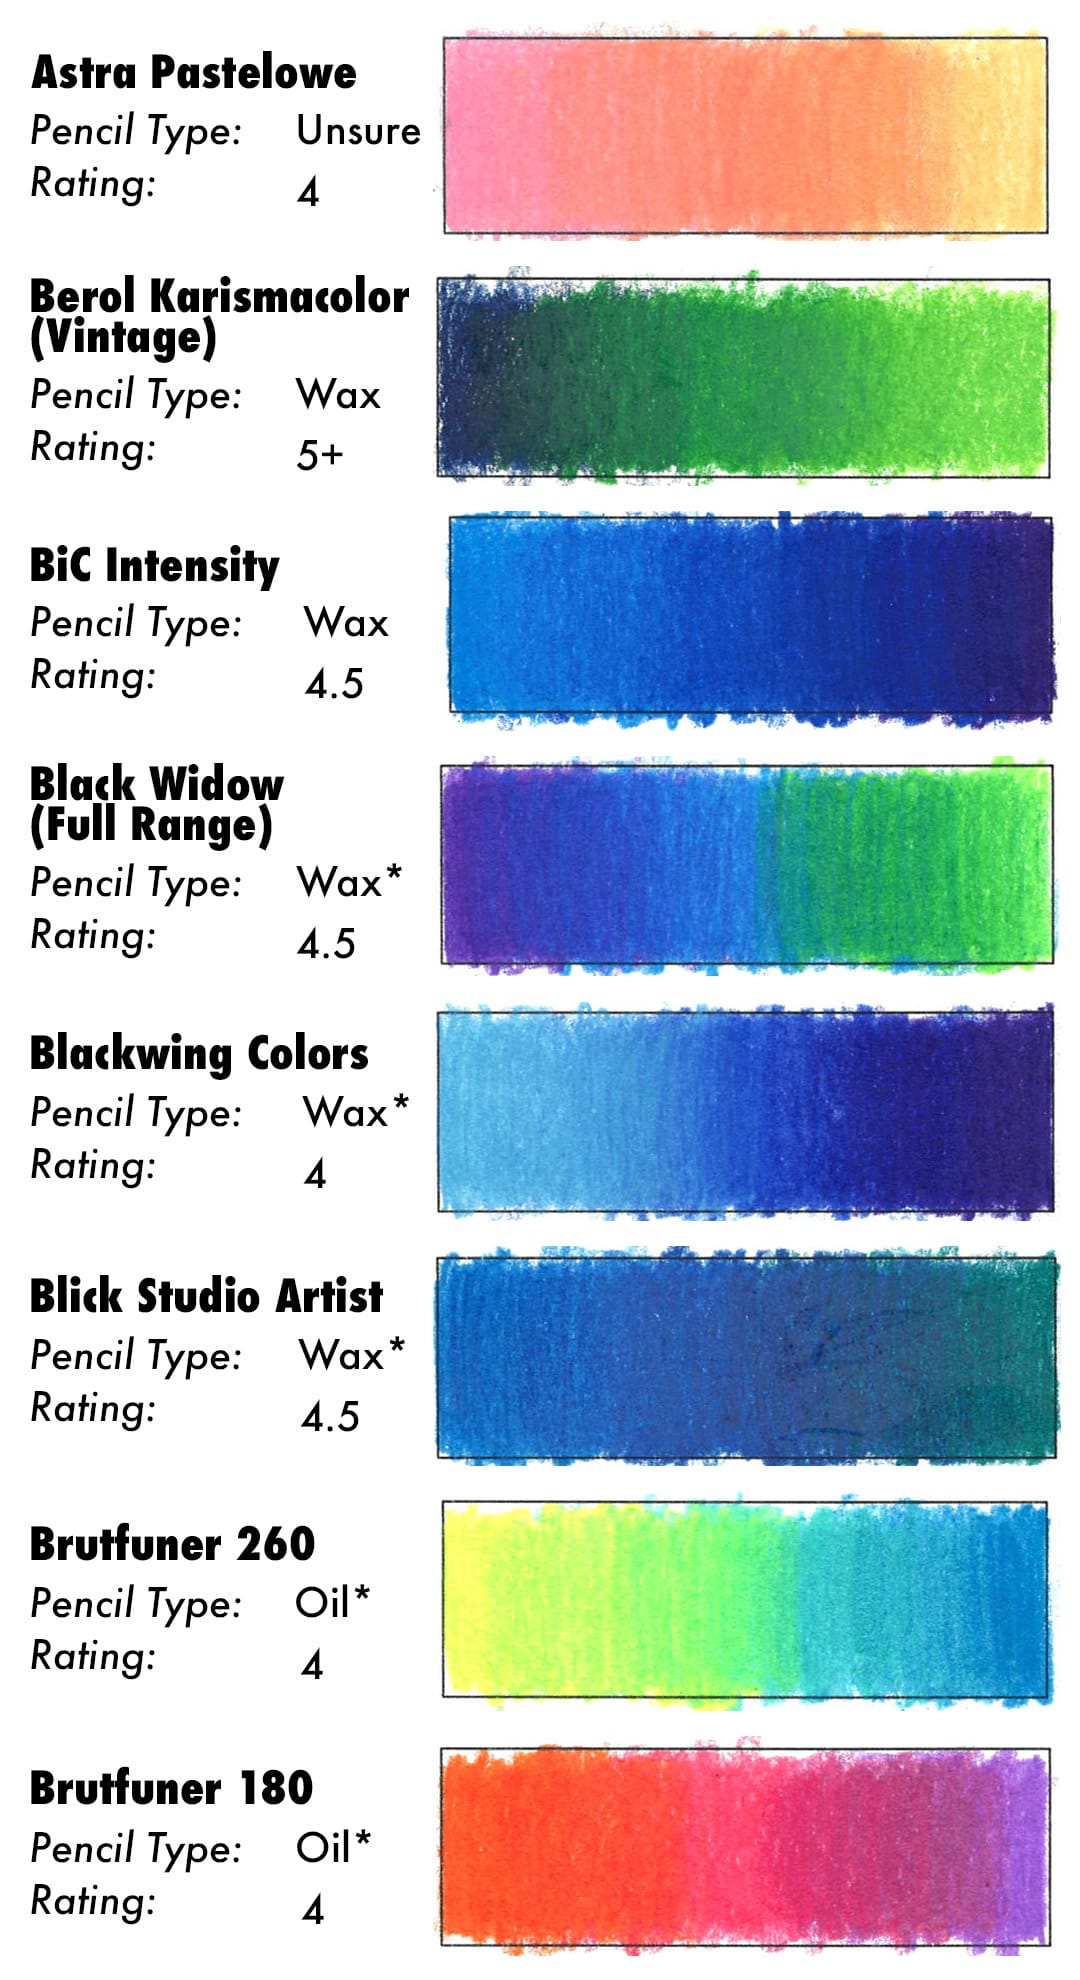 Colored Pencil Blending Results for Astra Pastelowe, Berol Karismacolor (Vintage), BiC Intensity, Black Widow (Full Range), Blackwing Colors, Blick Studio Artist, Brutfuner 260, and Brutfuner 180.